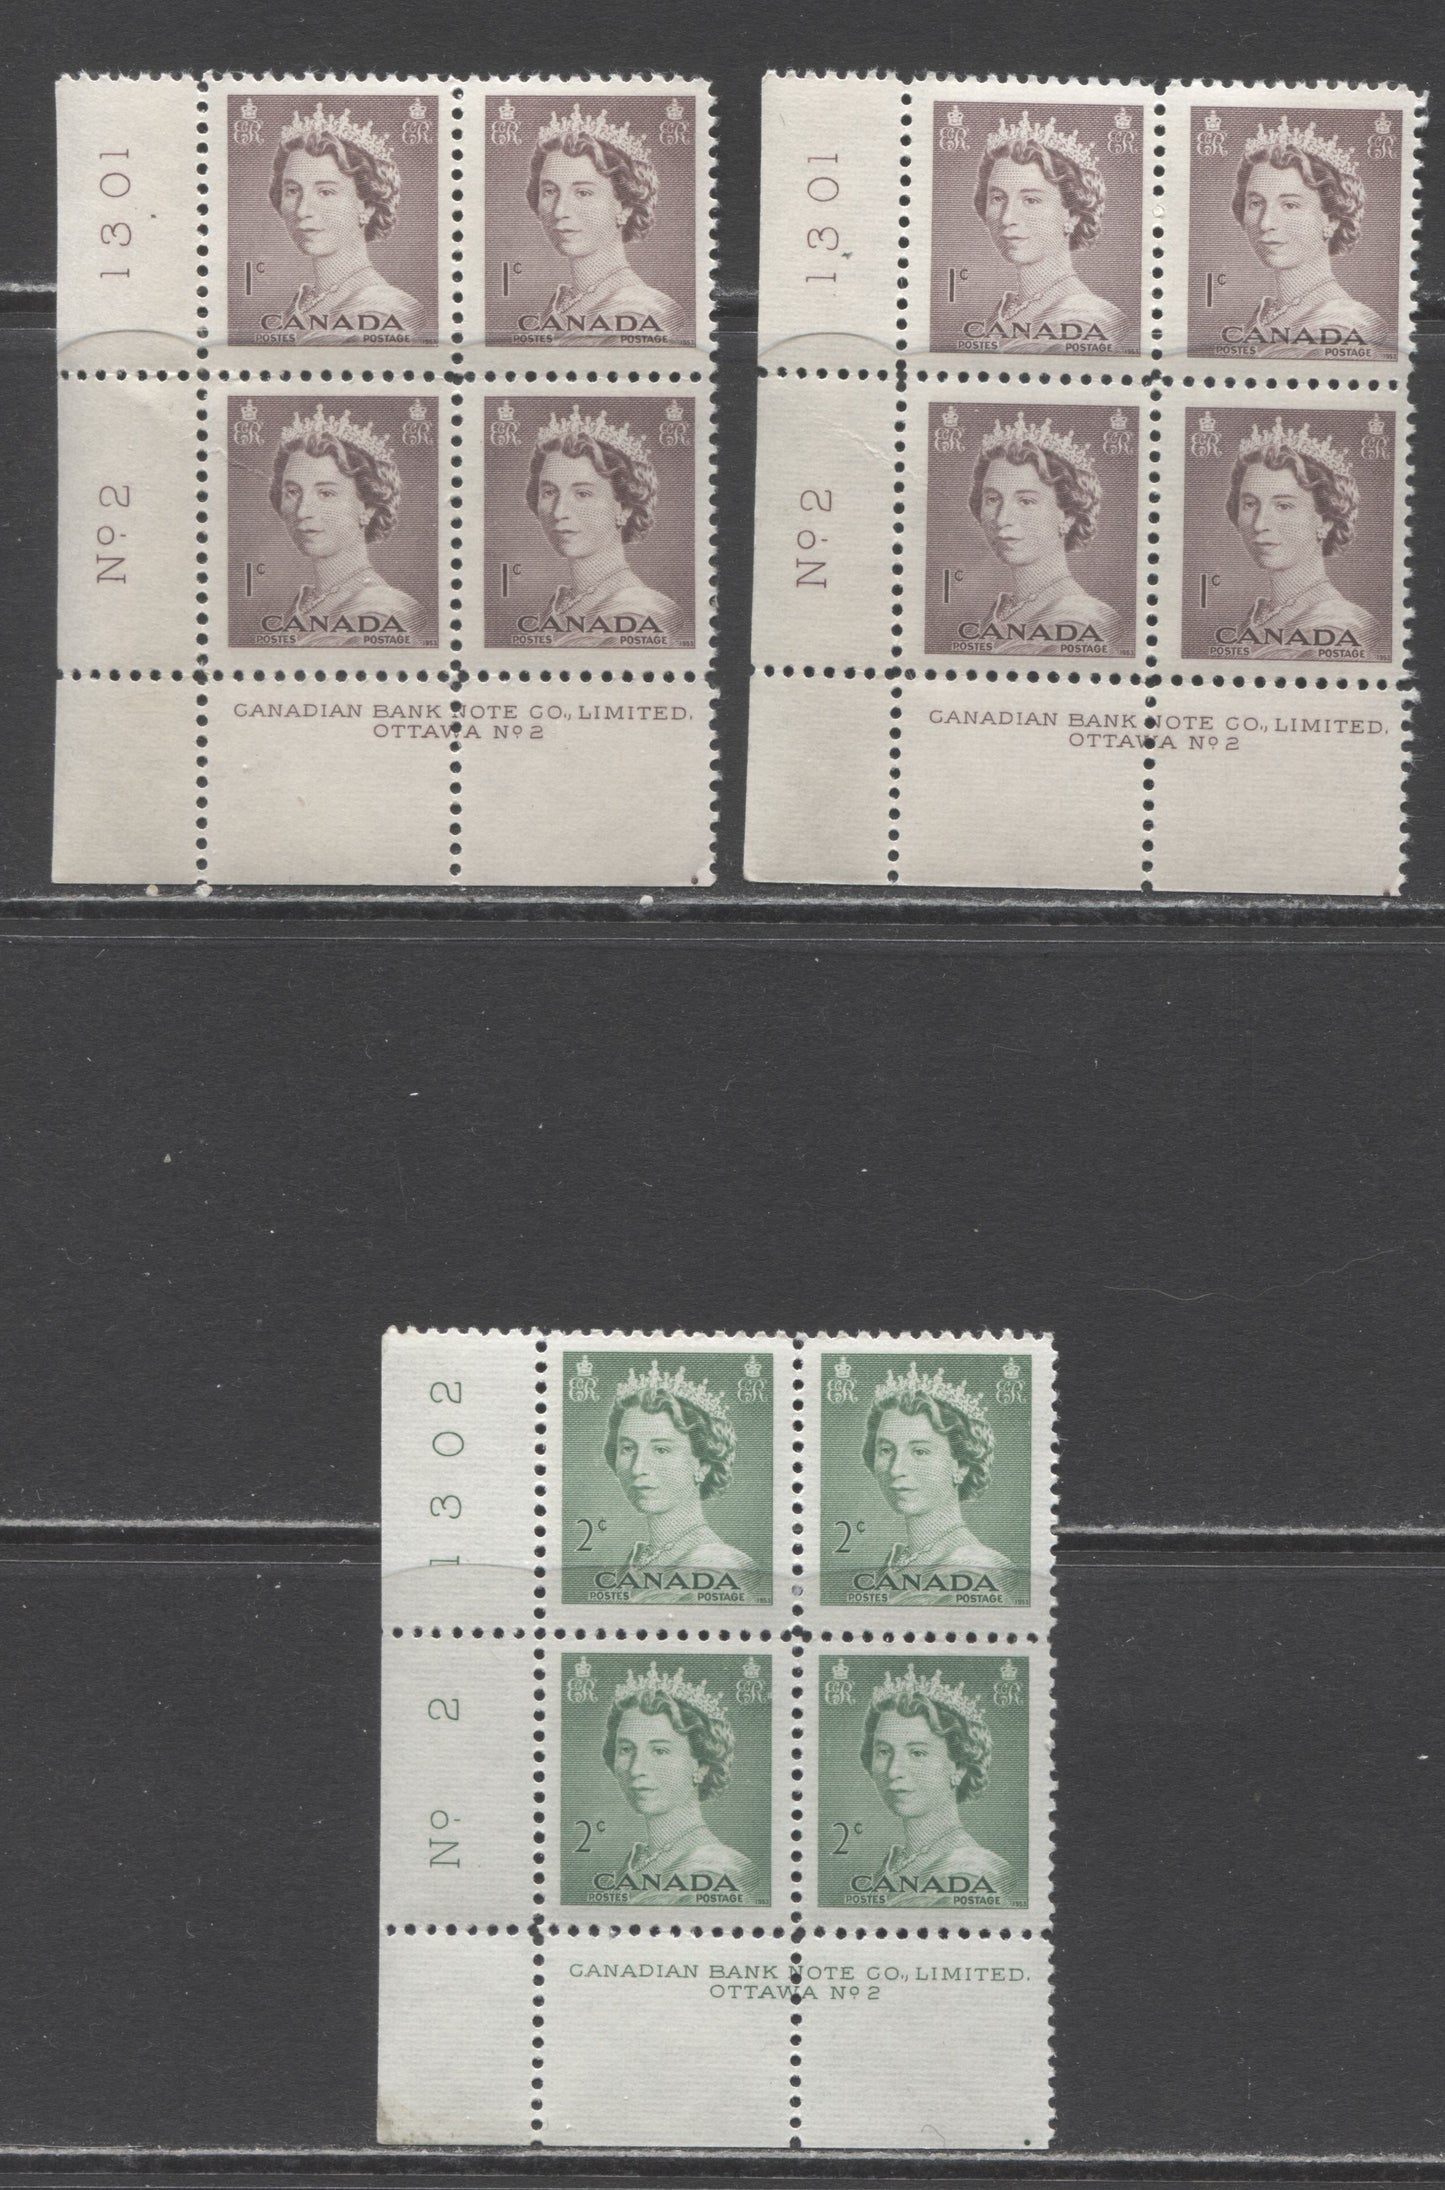 Lot 234 Canada #325-326 1c-2c Violet Brown & Pale Green Queen Elizabeth II, 1953-1954 Karsh Issue, 3 VFNH LL Plate 2 Inscription Blocks, Different Perfs